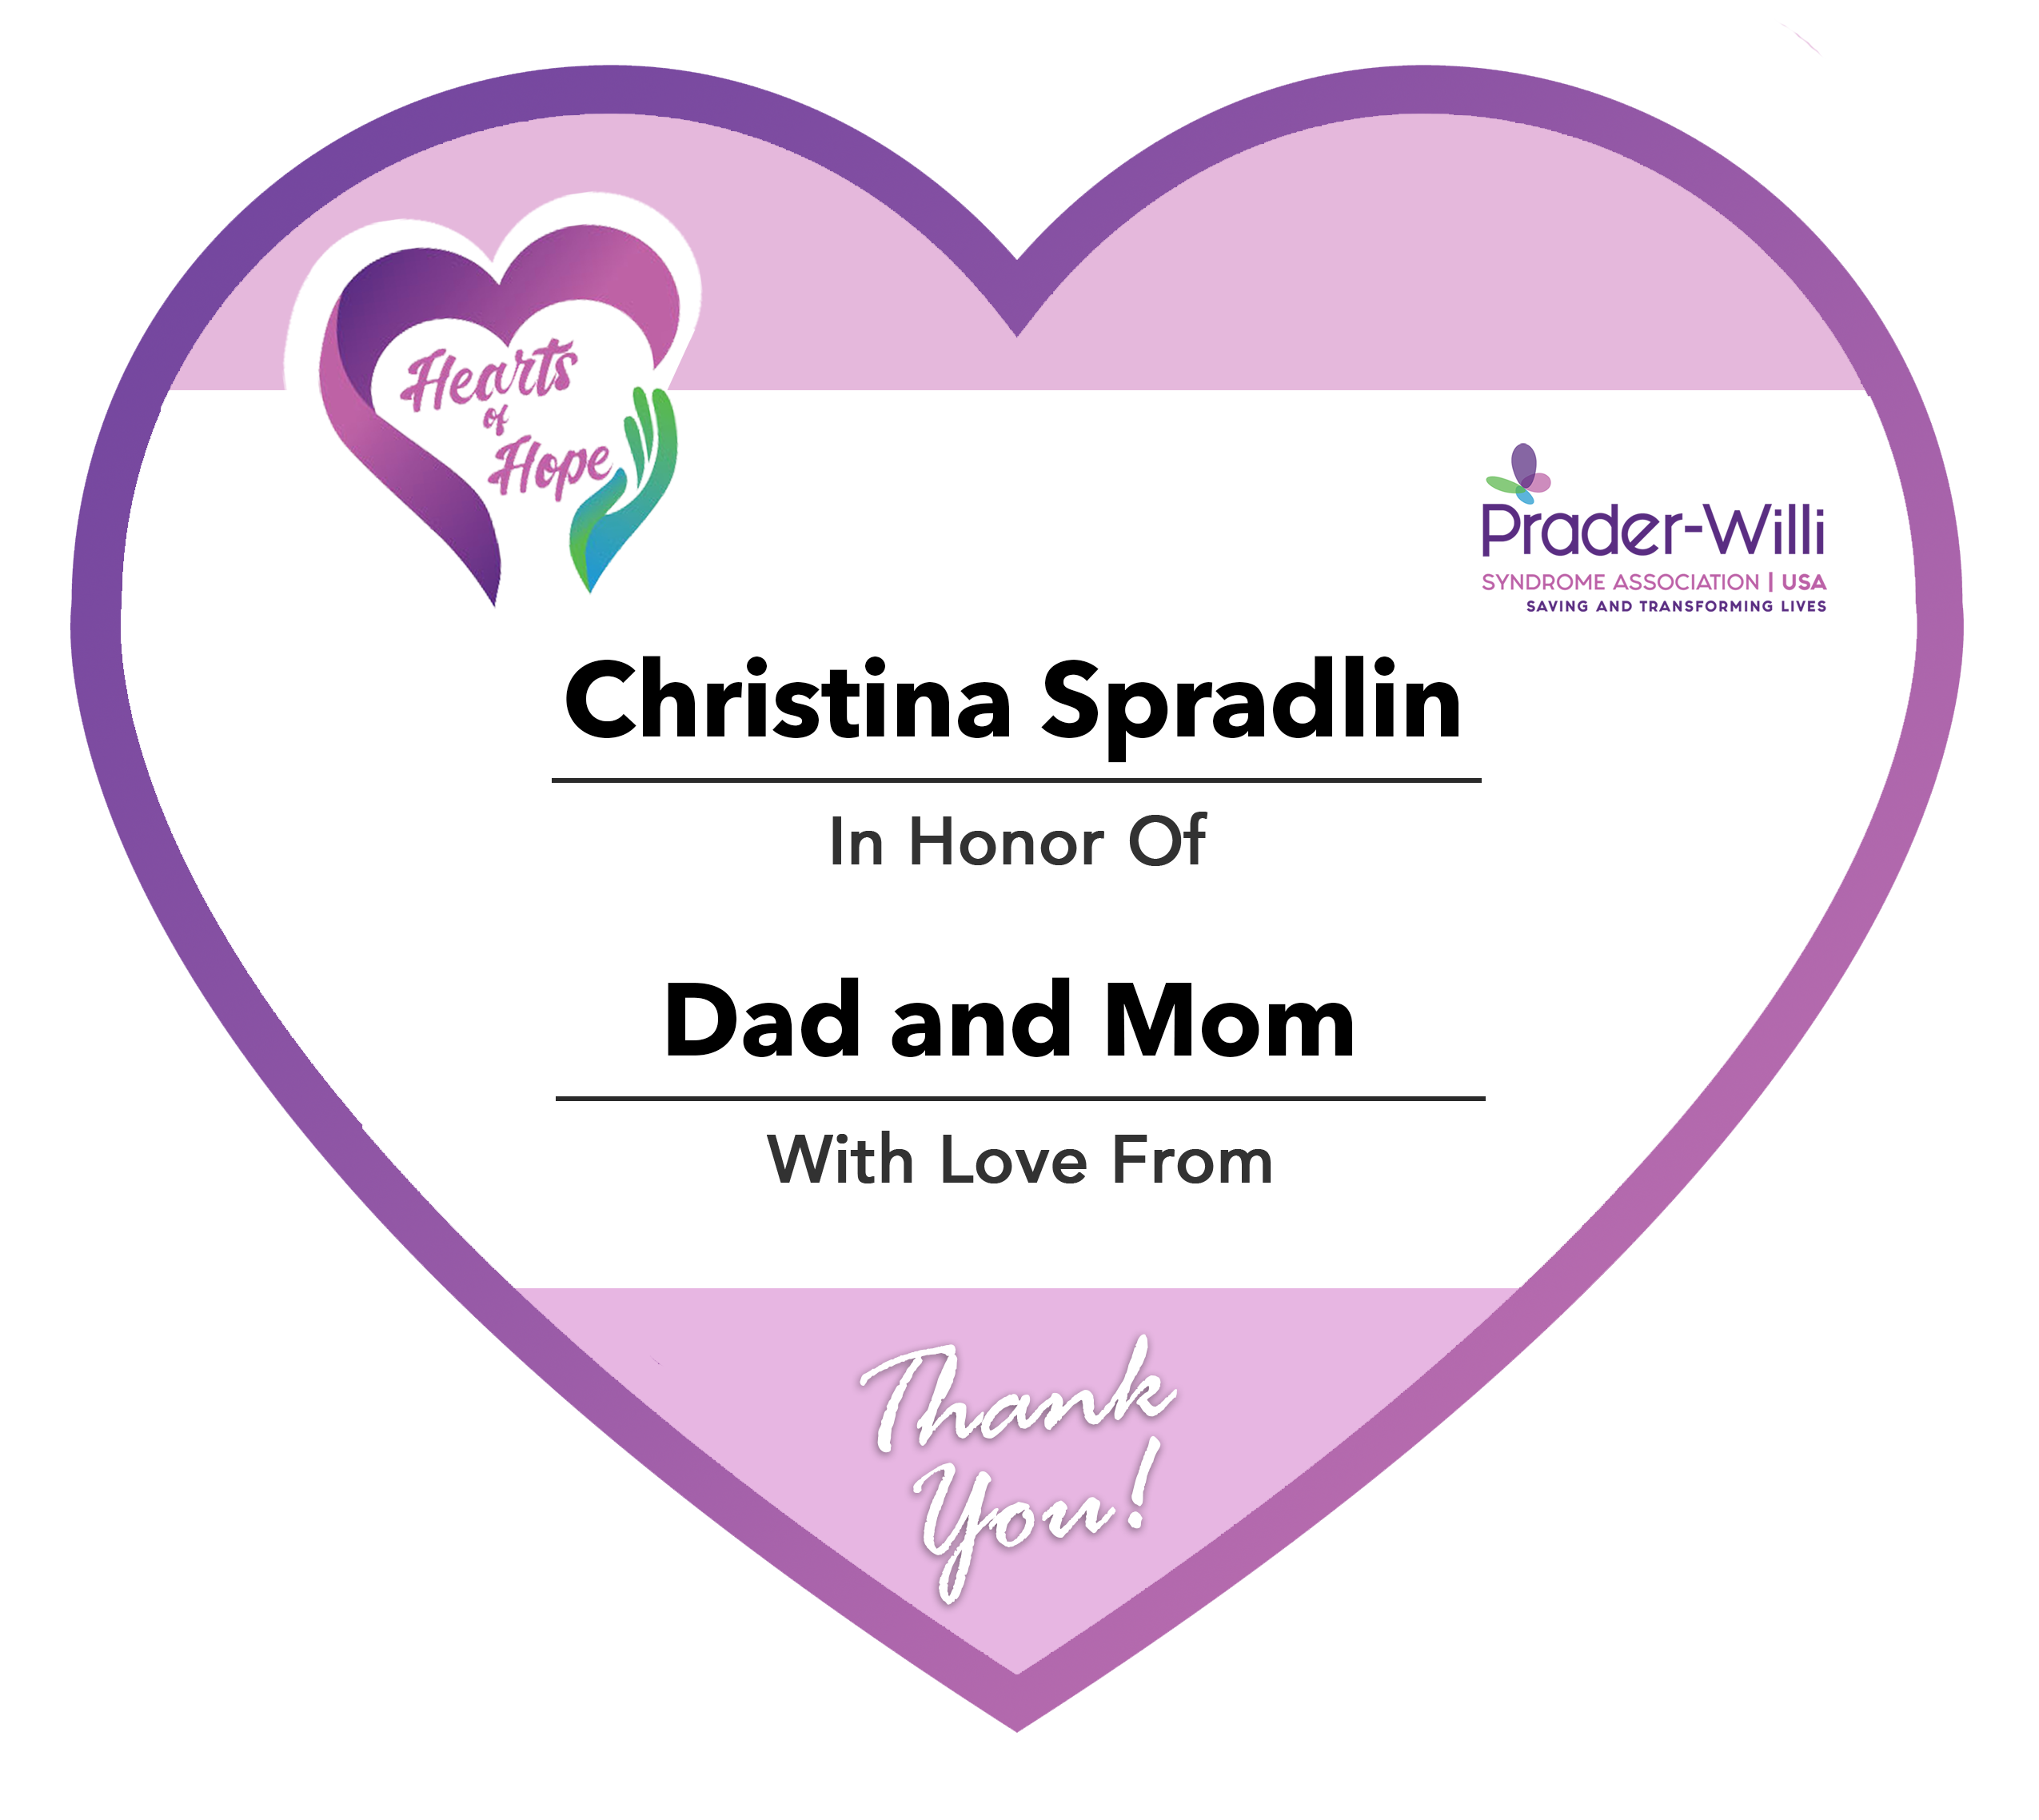 PWSA Paperheart ChristinaSpradlin, Prader-Willi Syndrome Association | USA